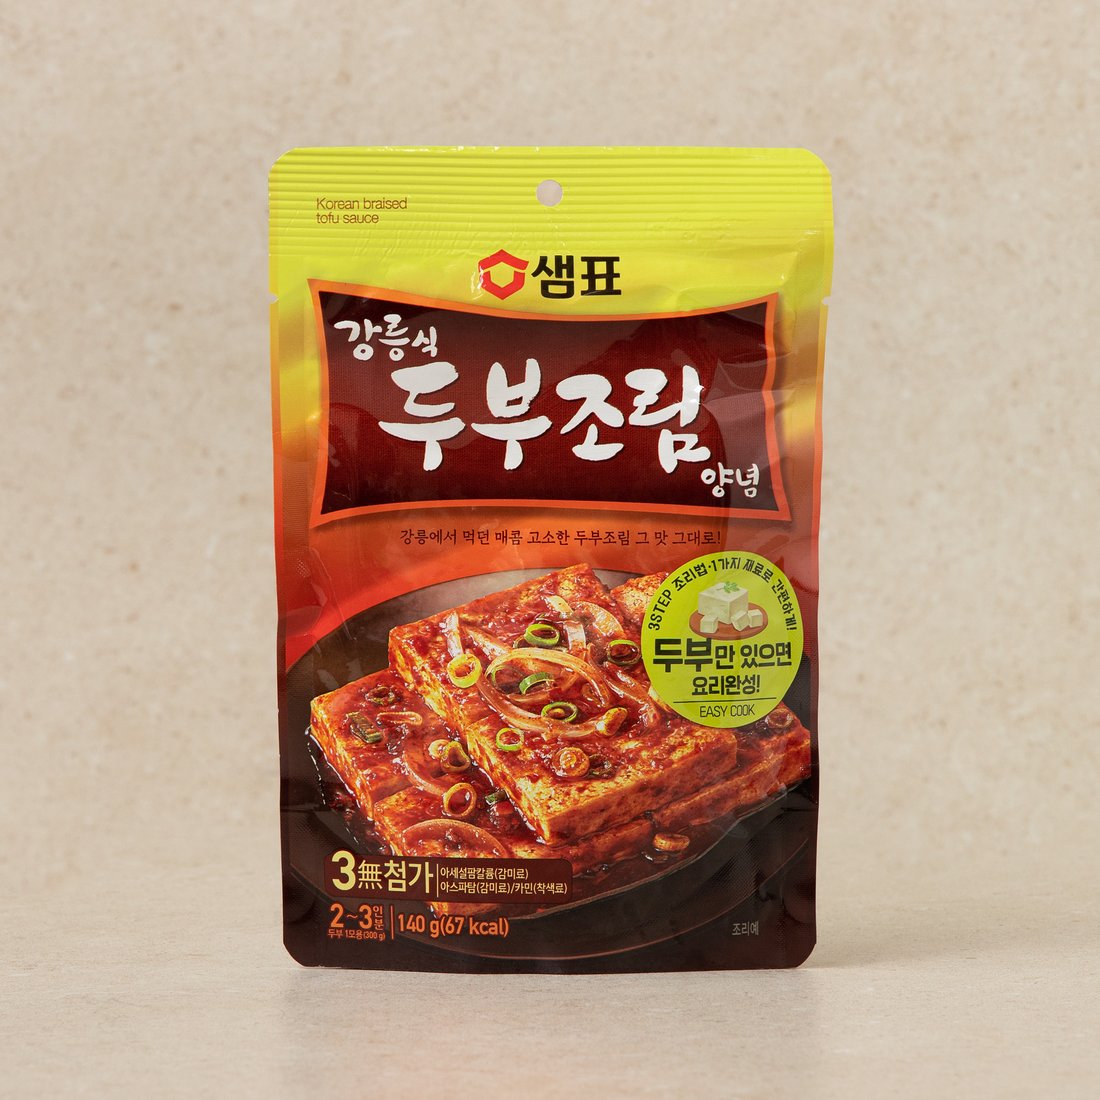 SP Gangneungsik braised tofu sauce 강릉식 두부조림 양념 140g